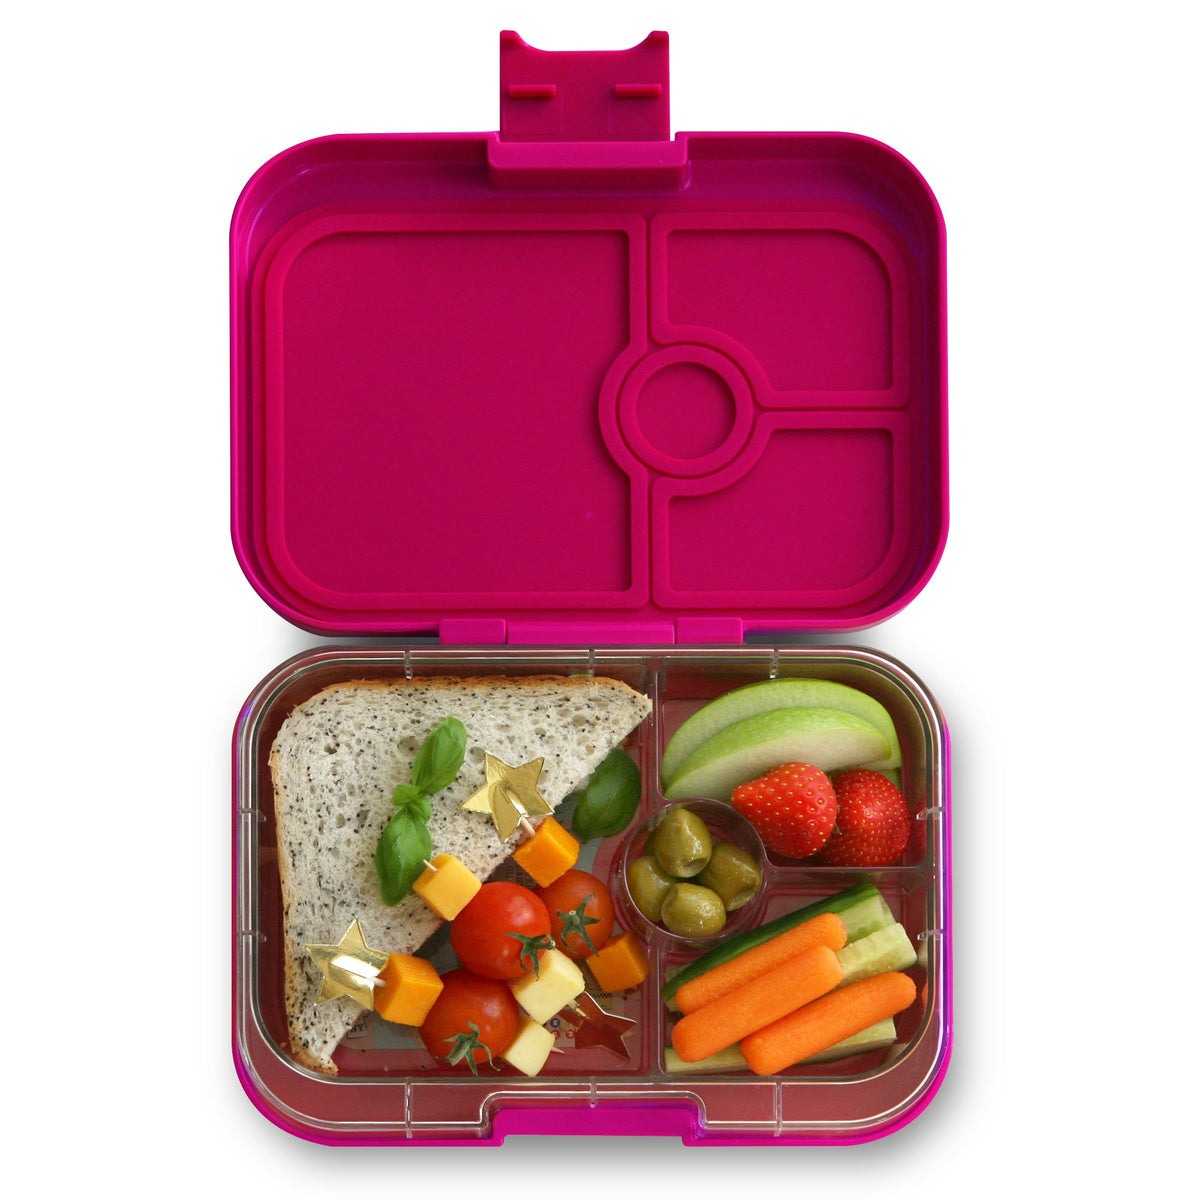 yumbox-panino-tribeca-pink-nyc-4-compartment-lunch-box- (4)